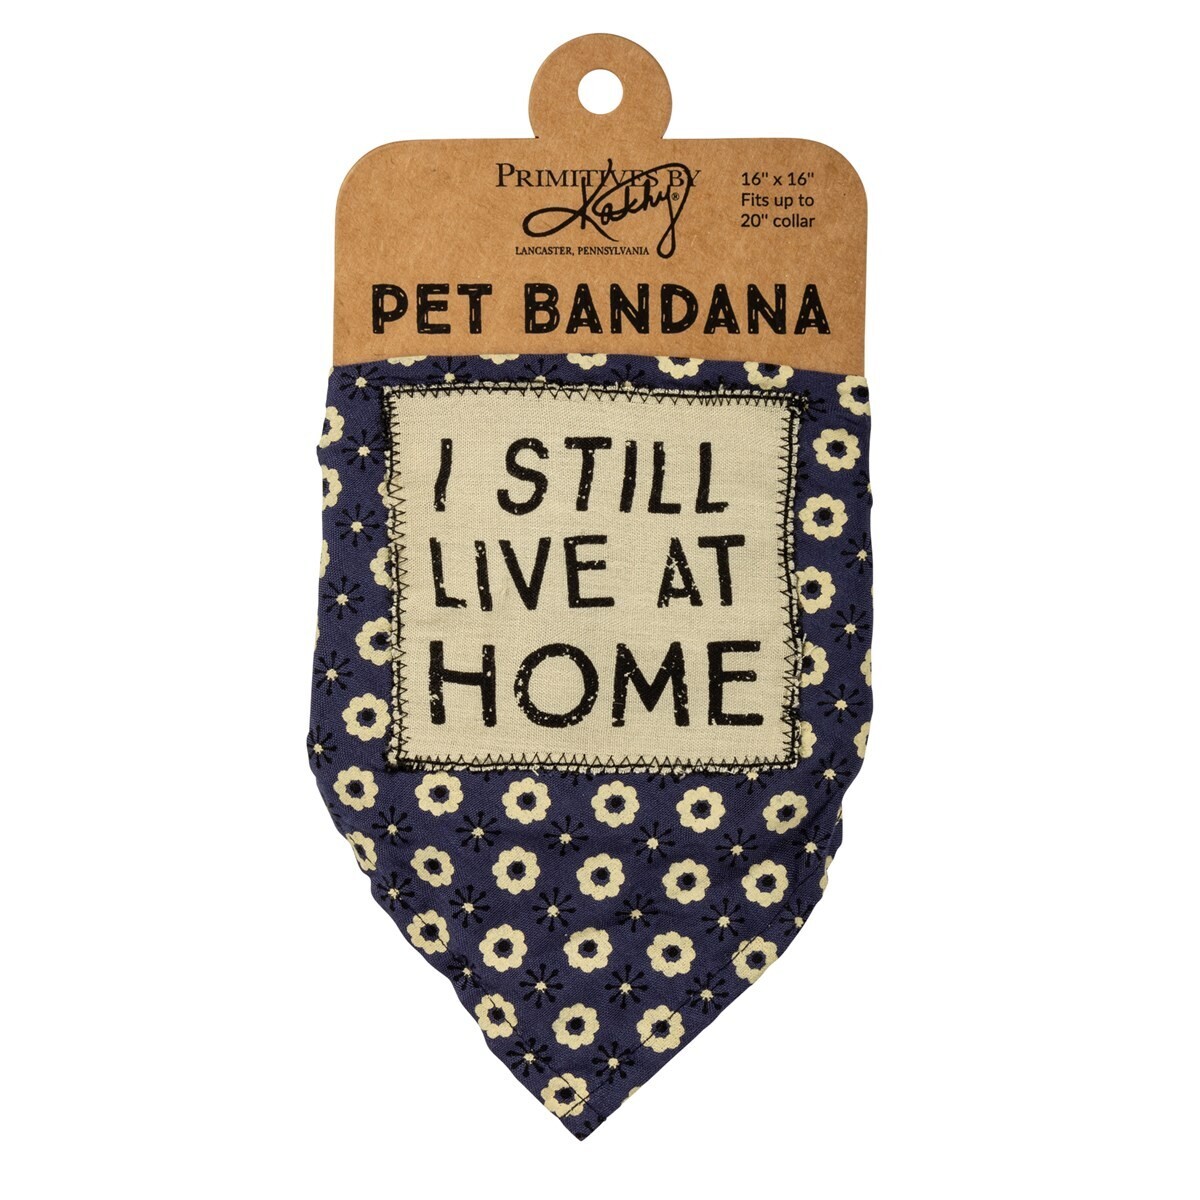 Pet Bandana - I Still Live at Home